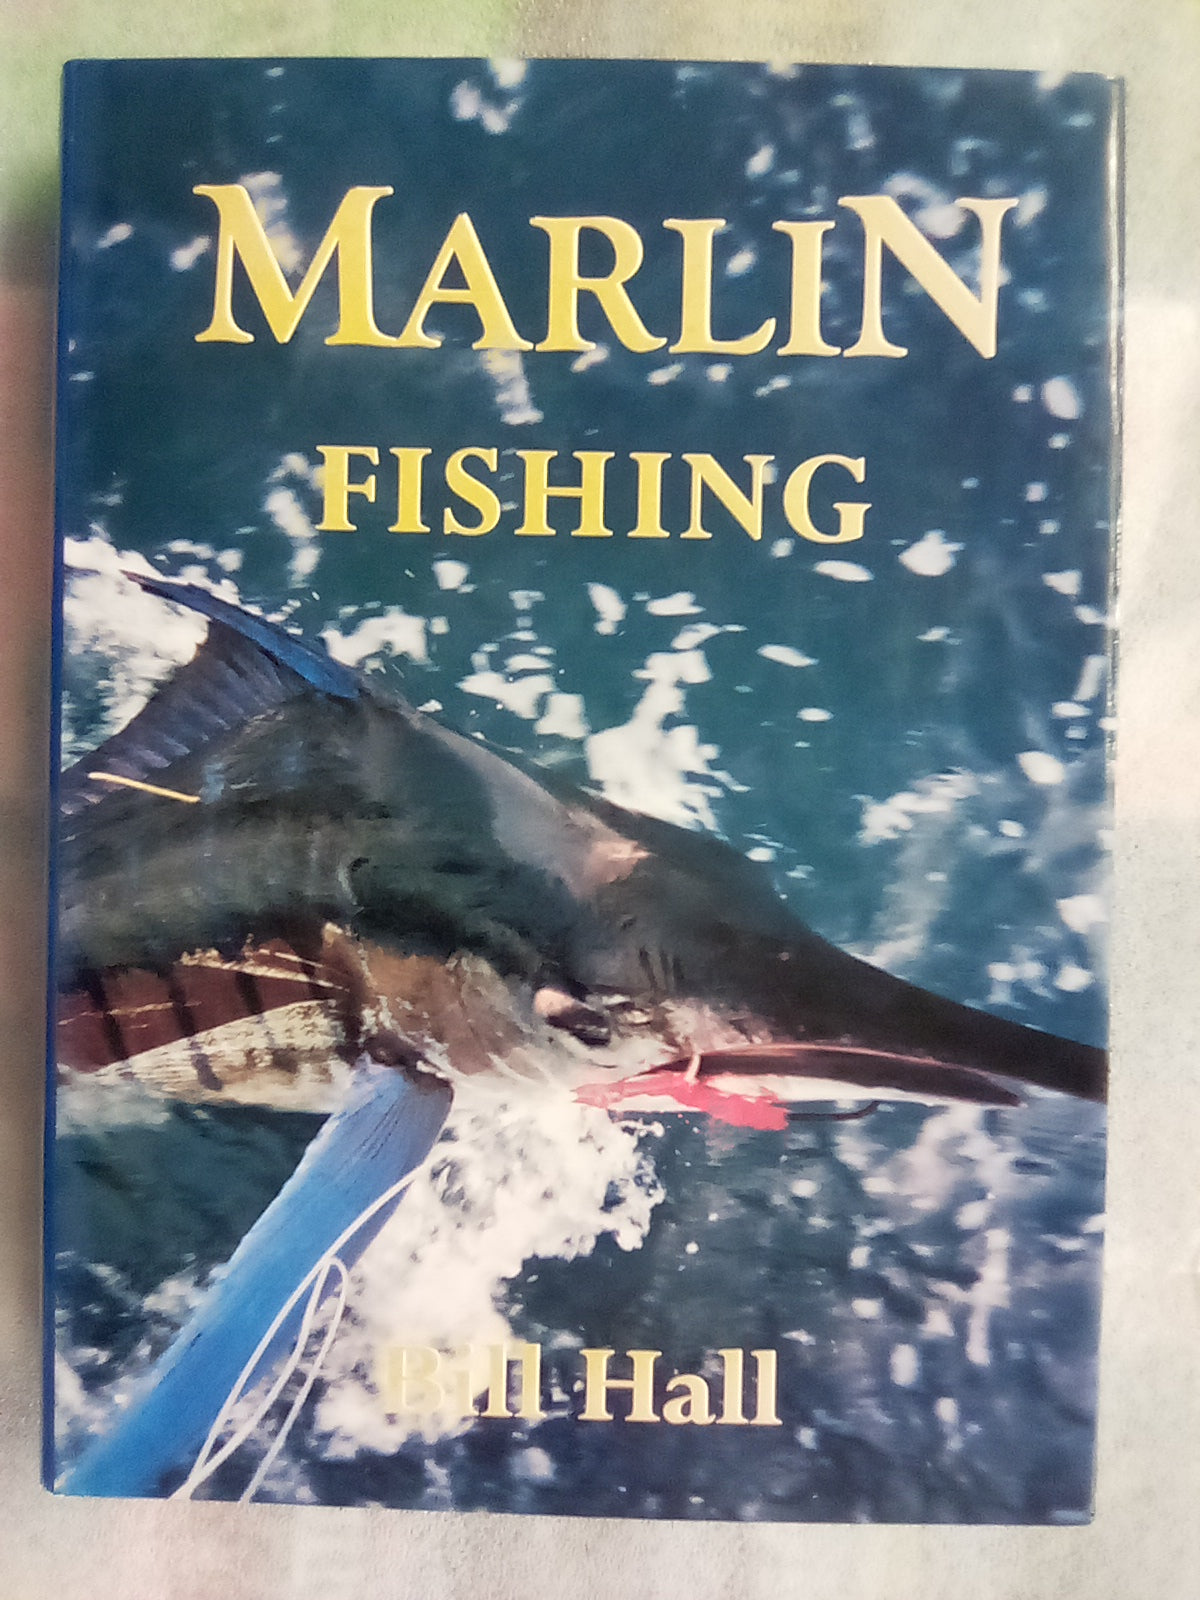 Marlin Fishing by Bill Hall